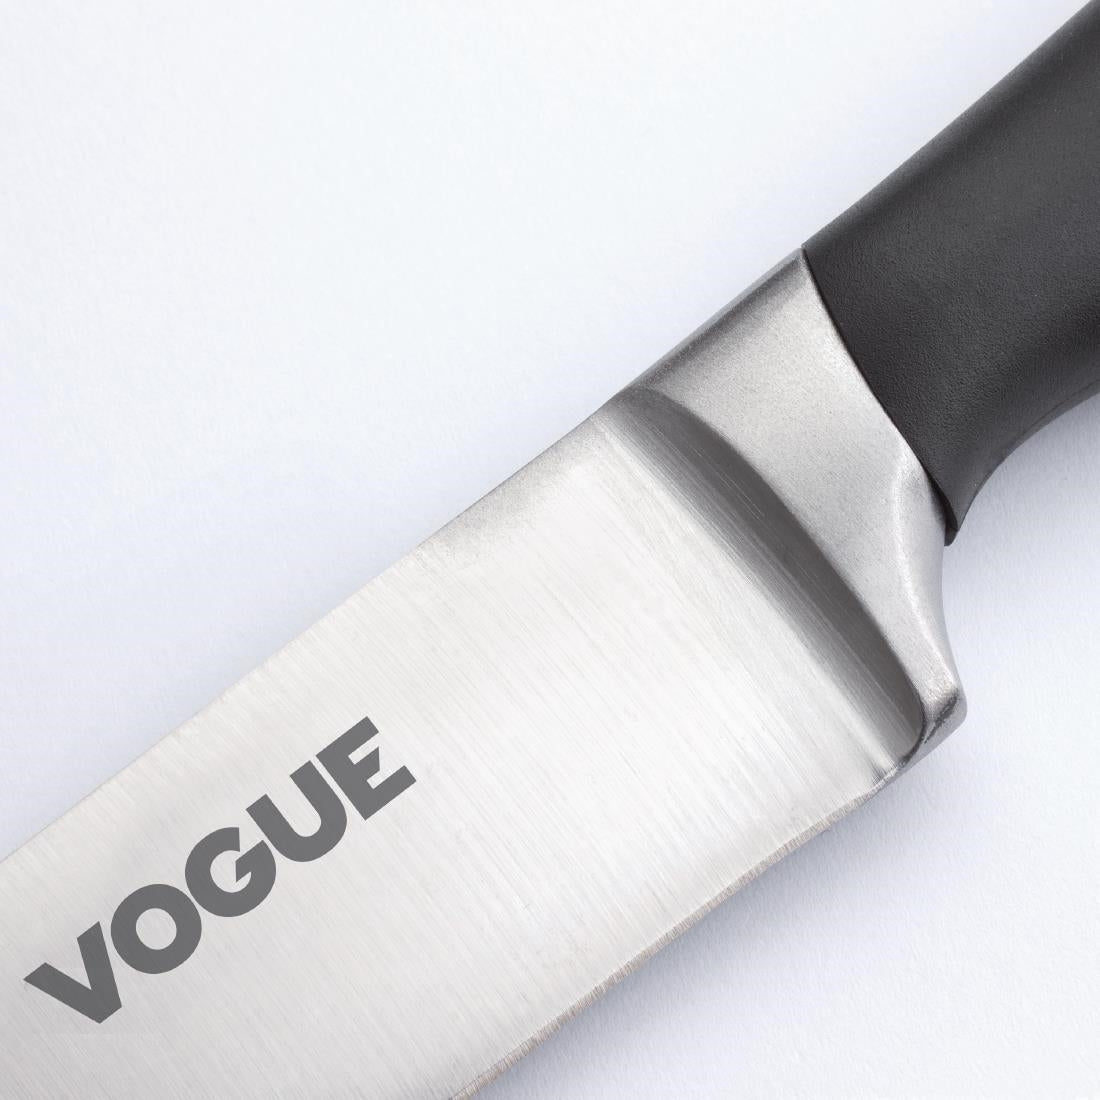 GD758 Vogue Soft Grip Carving Knife 20.5cm JD Catering Equipment Solutions Ltd